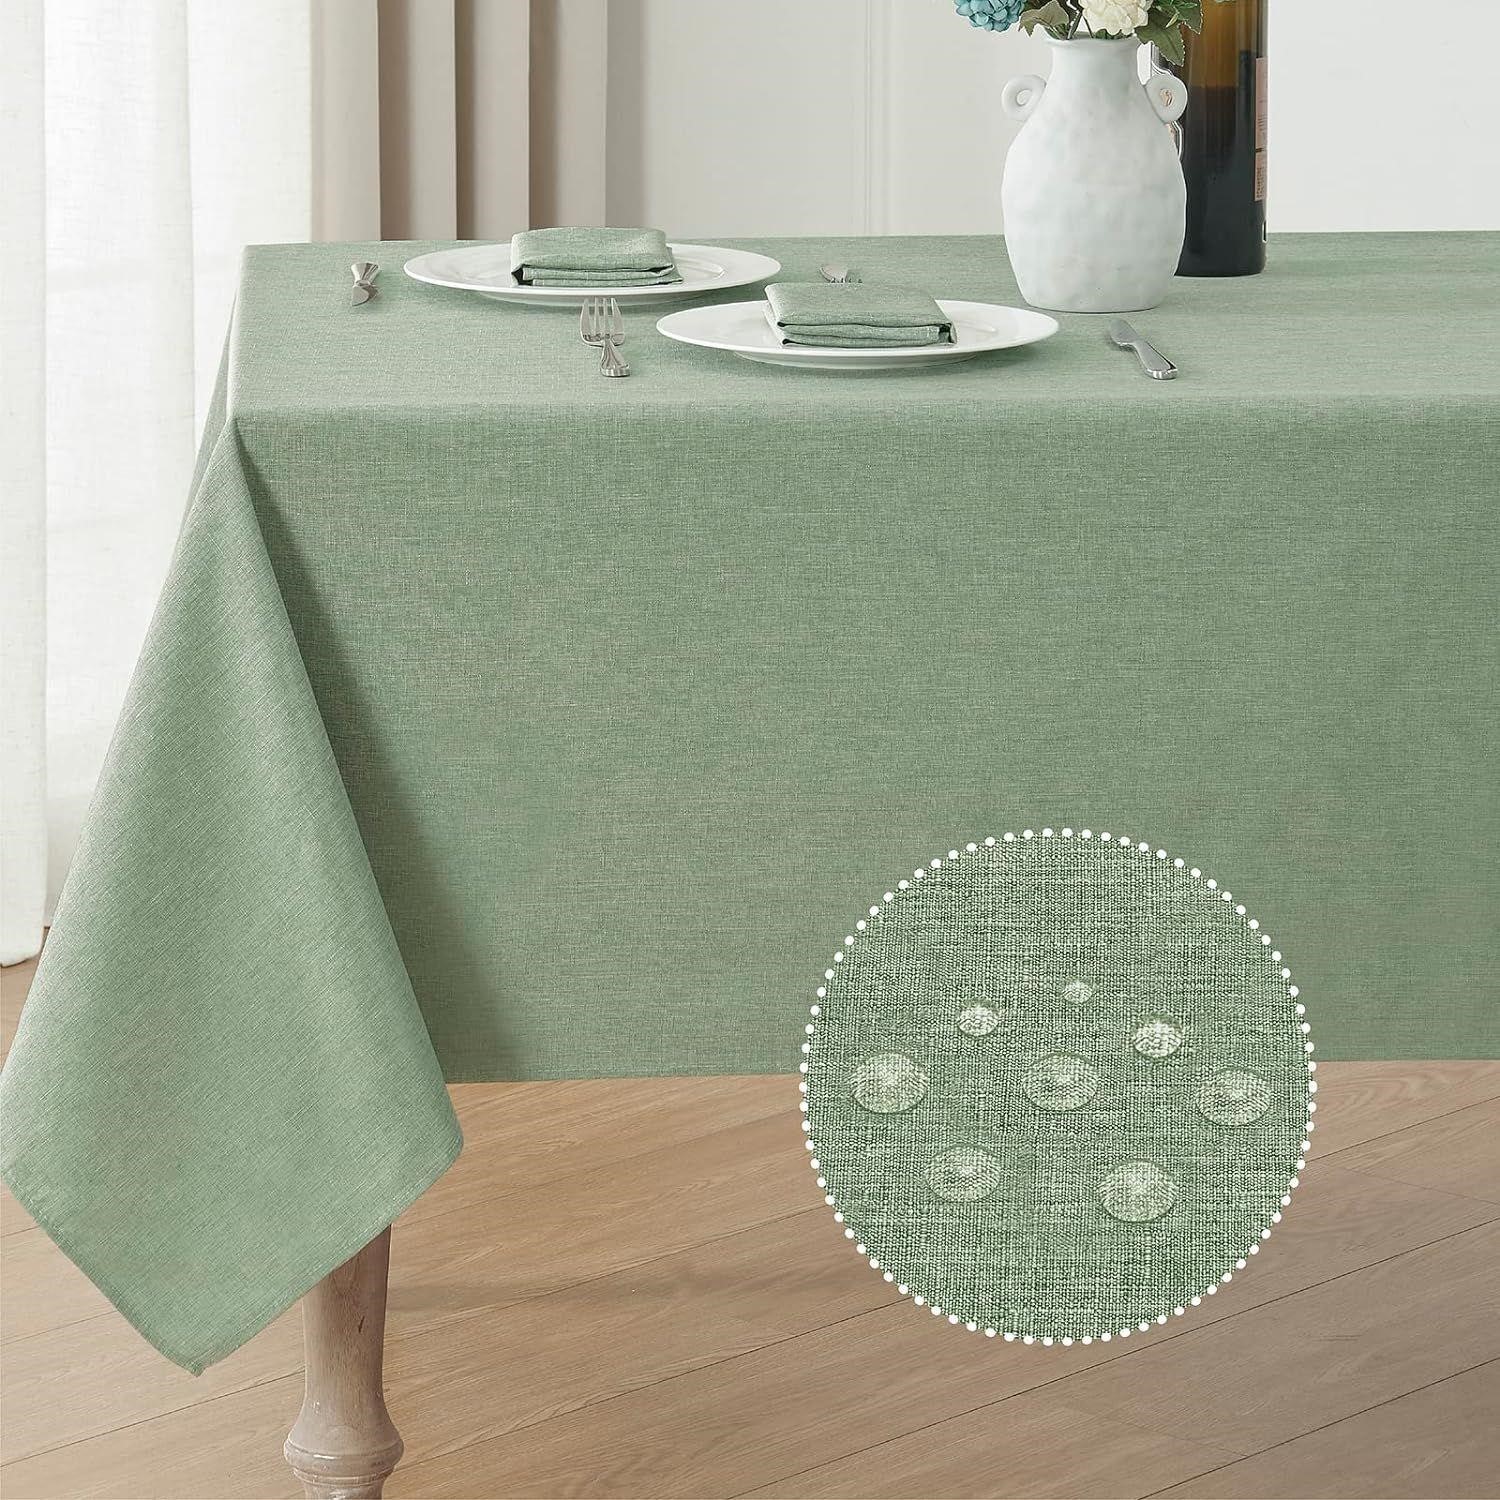 Veblandy Rectangle Tablecloth Linen Textured